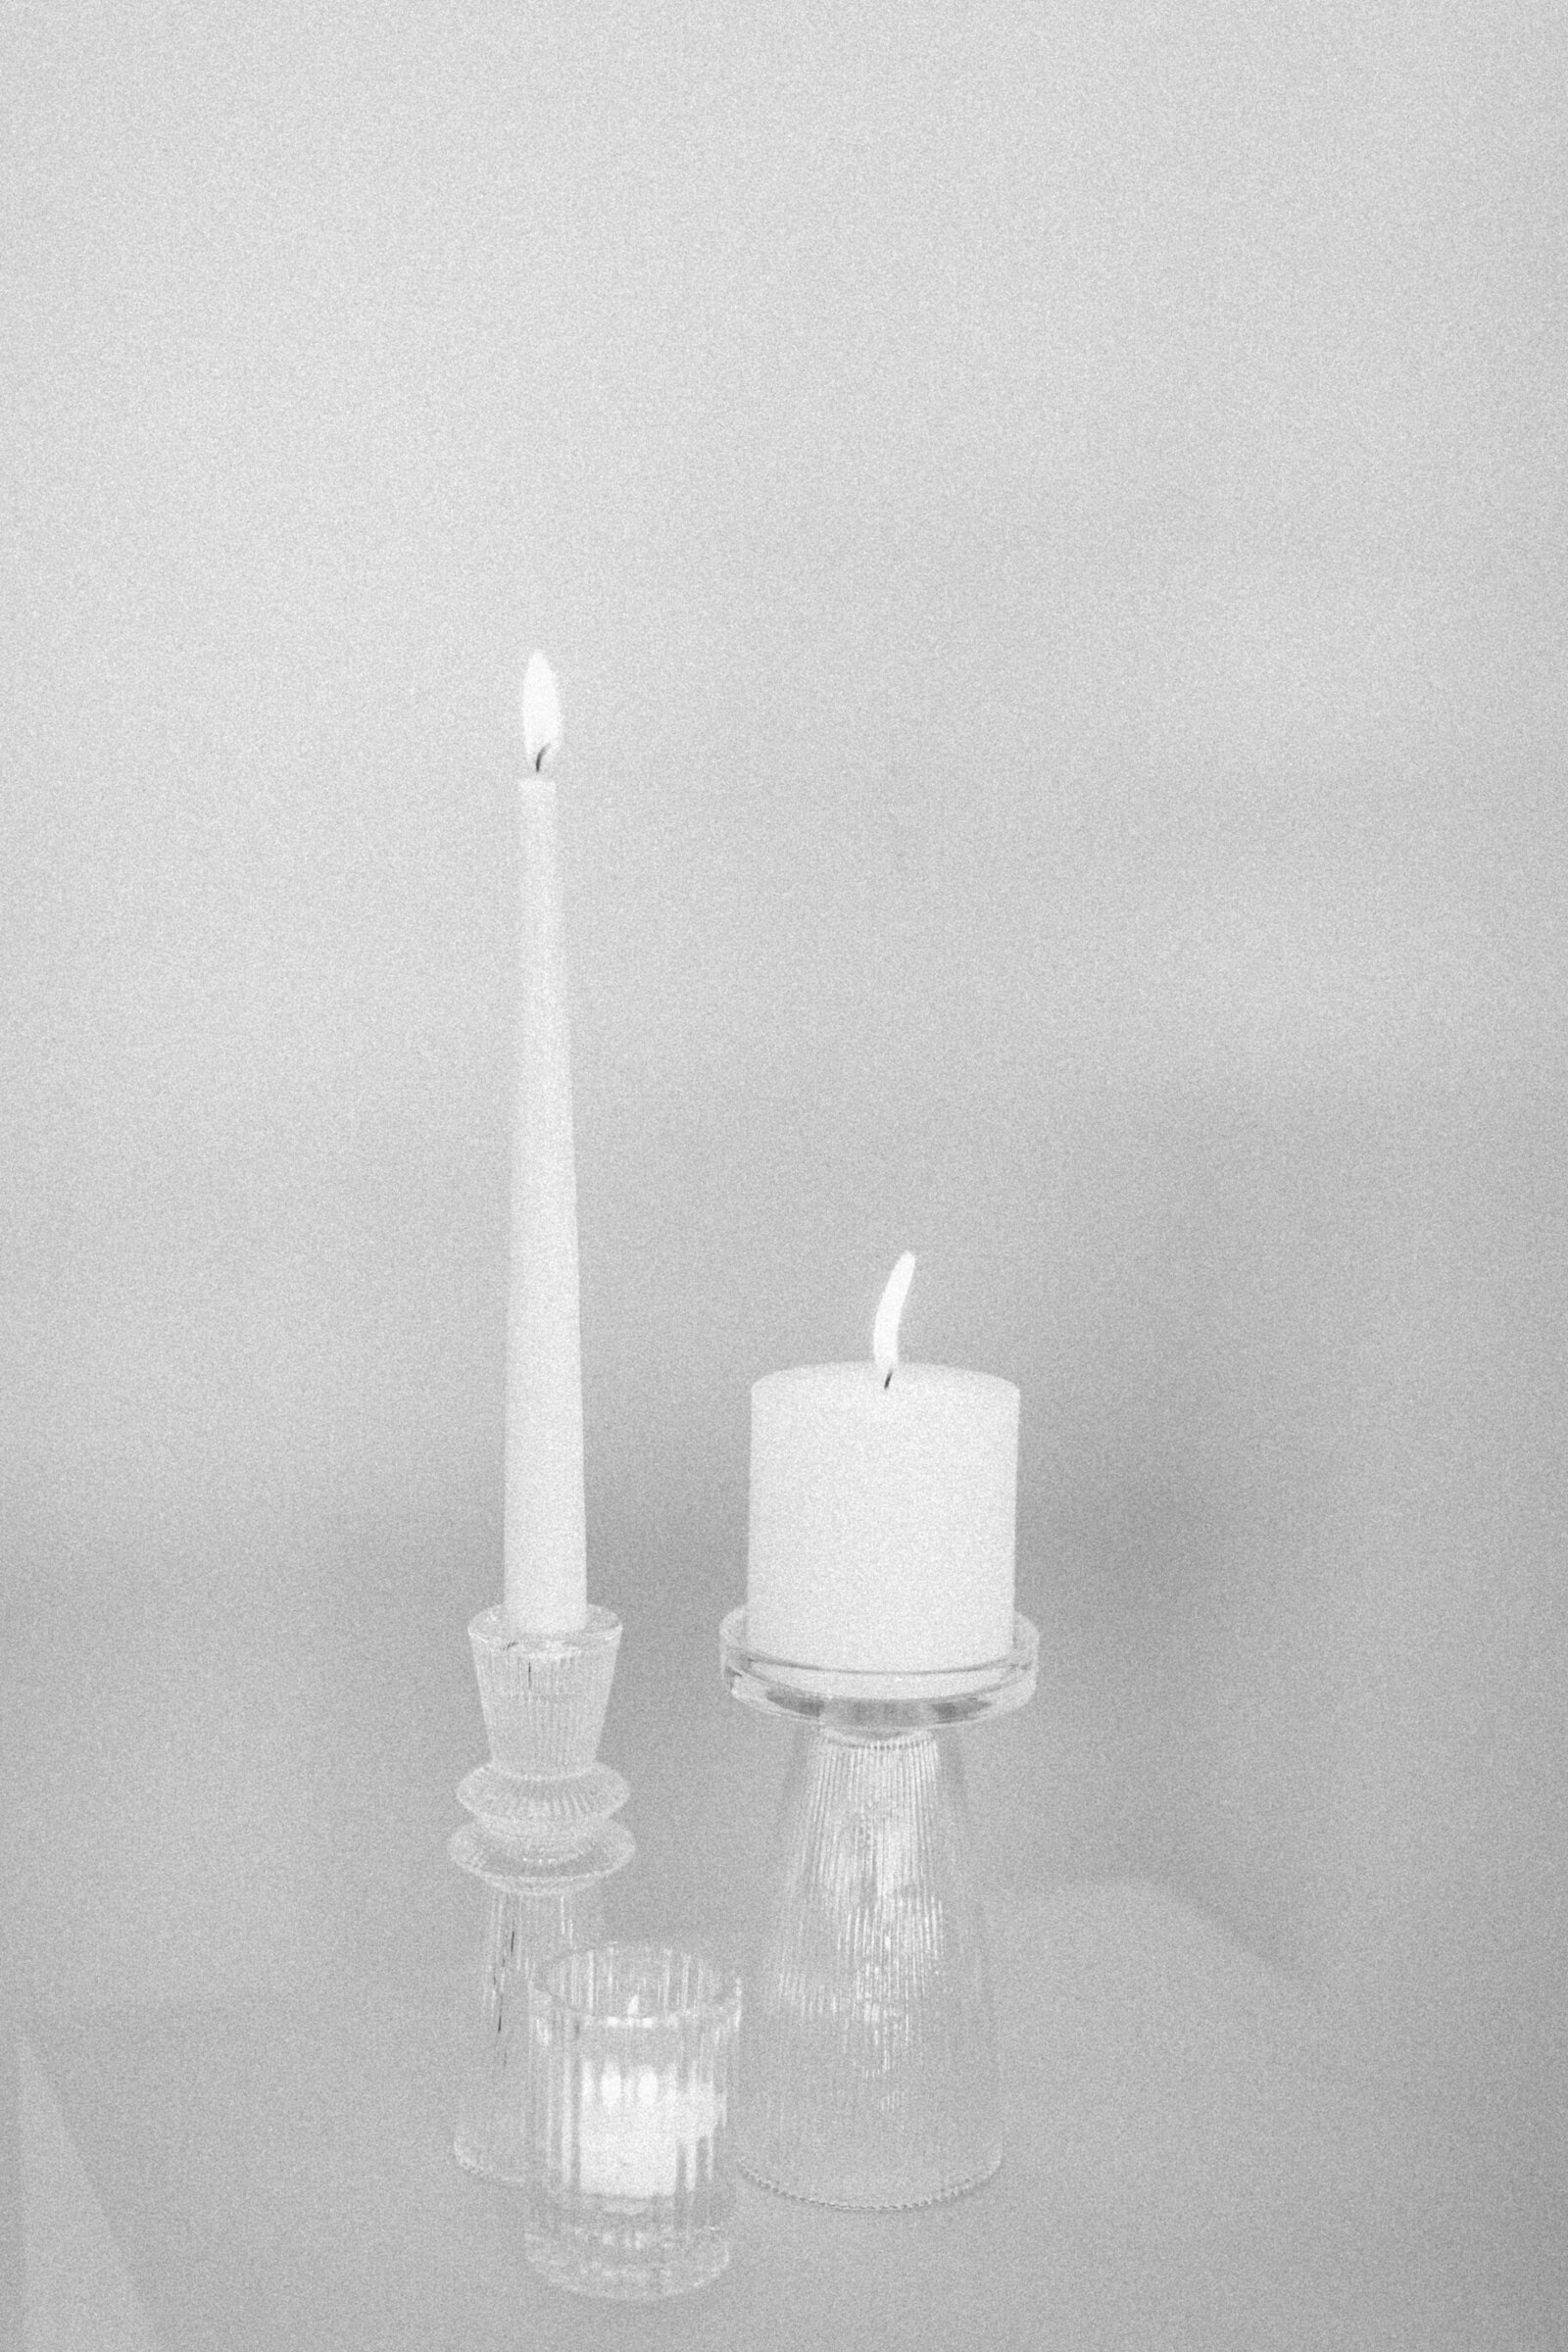 Candles_B_W